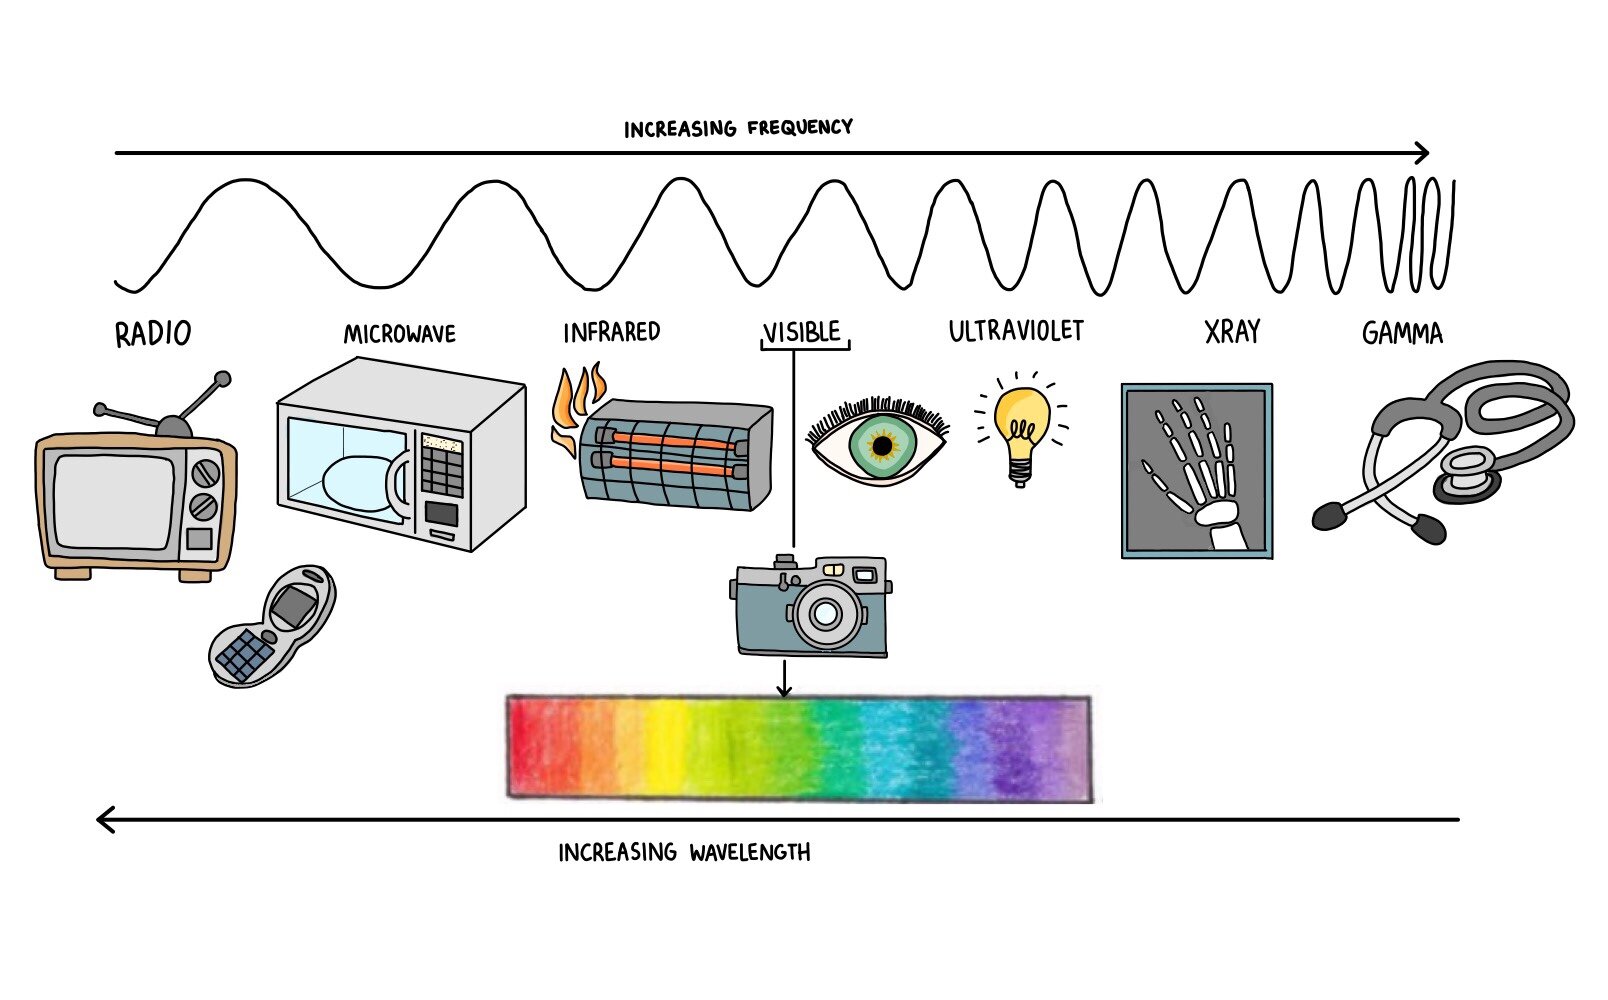 Electromagnetic Spectrum Science